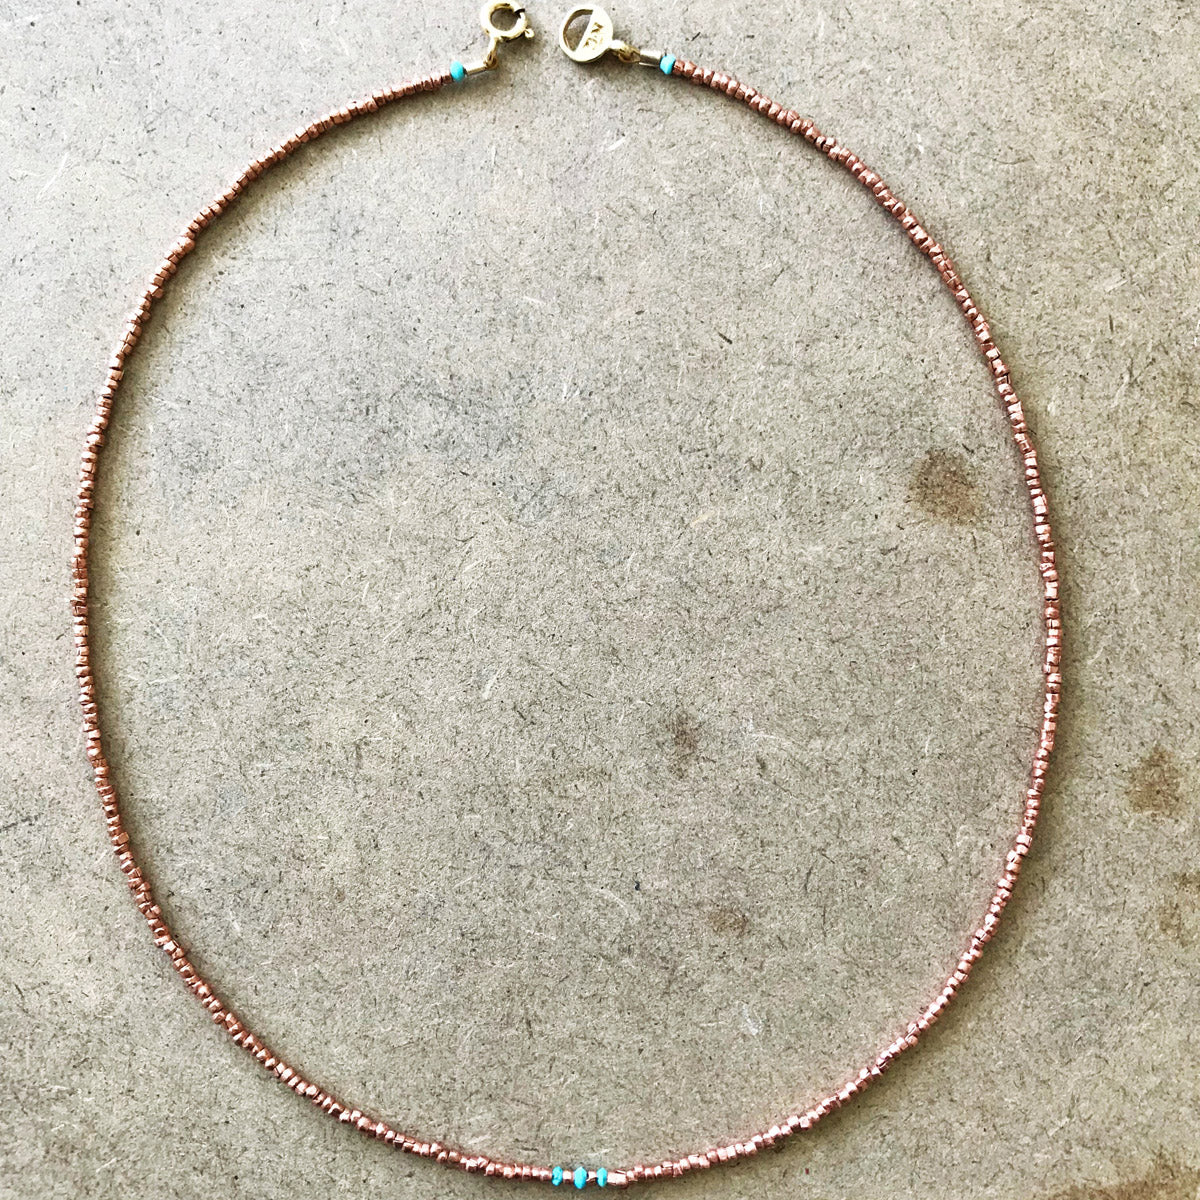 Copper & Turquoise Beaded Wrap Bracelet "Fiddletown" | Narrow-Gauge Designs